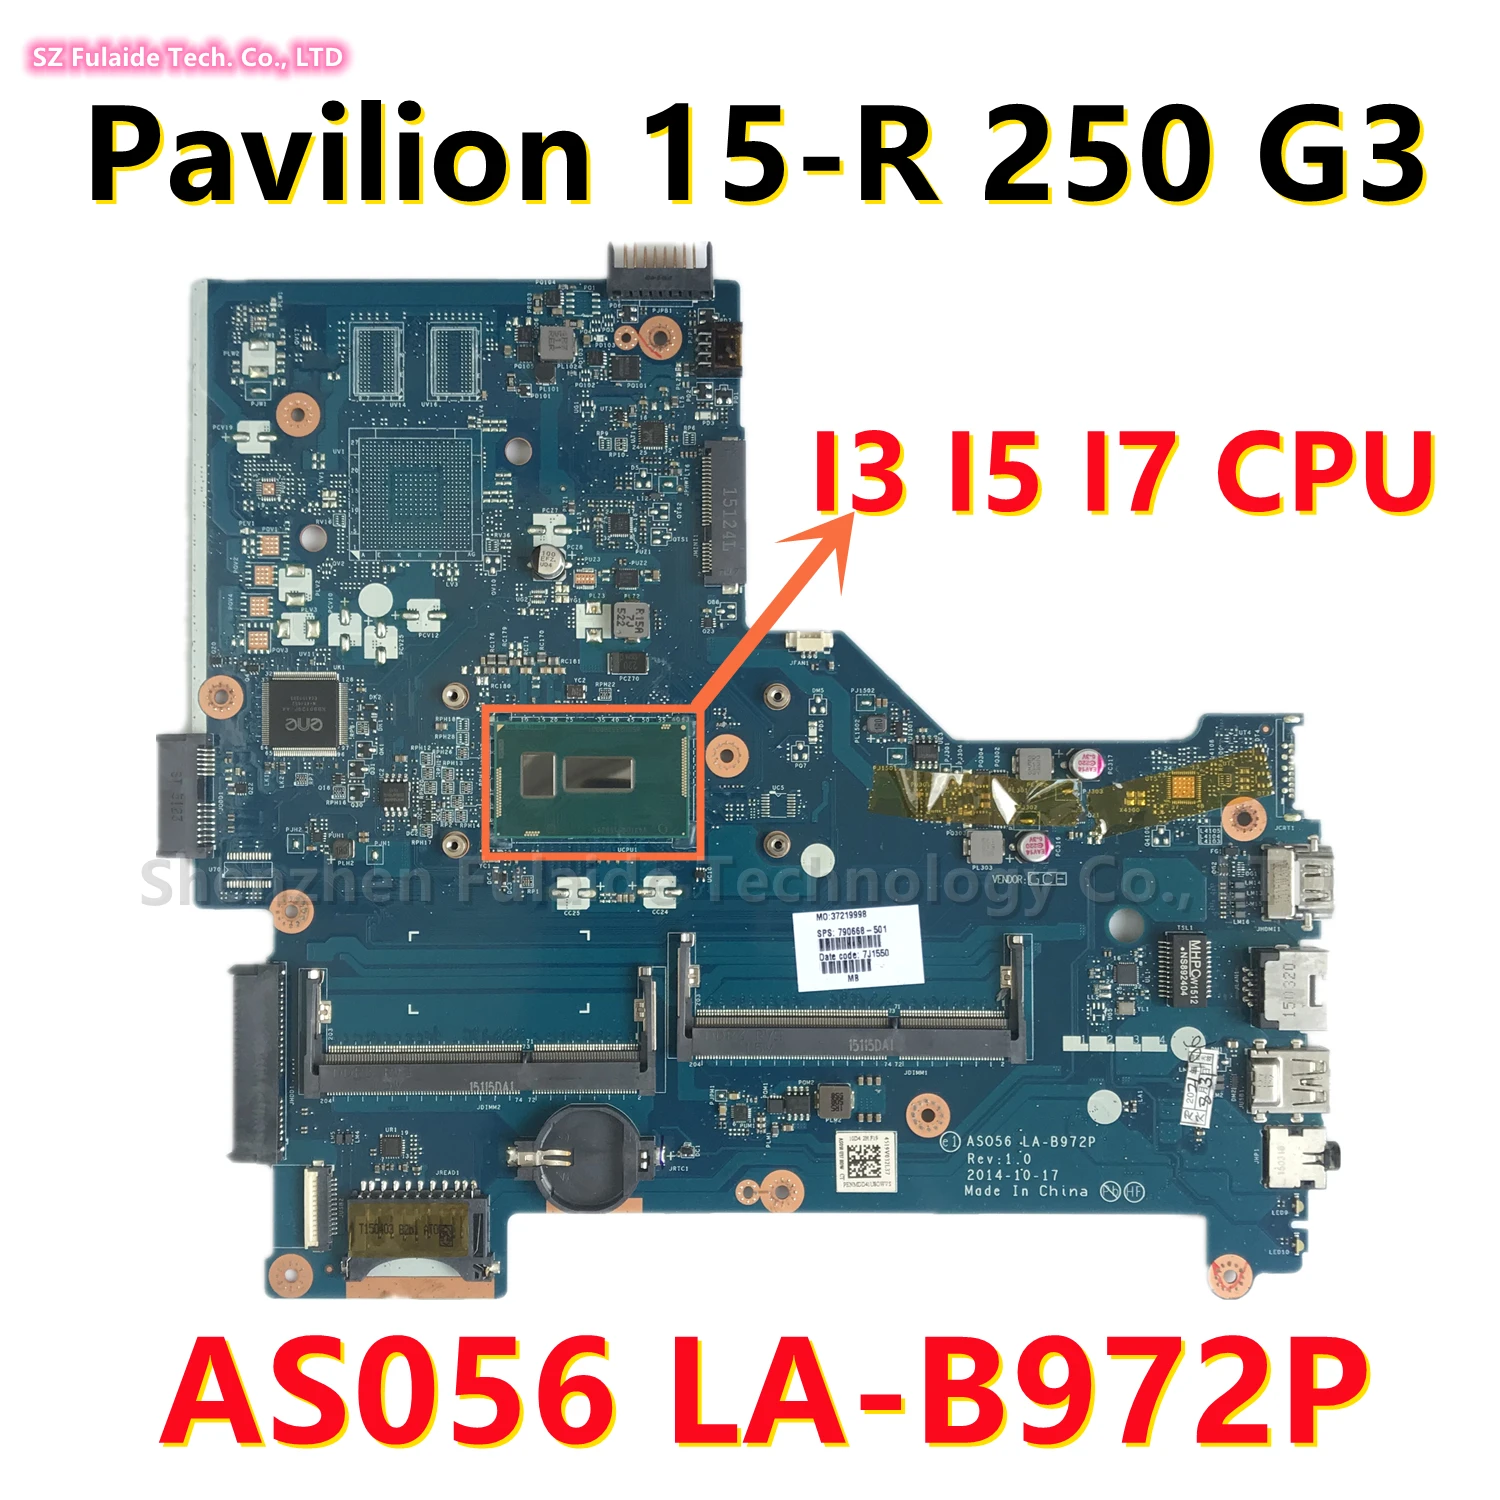   AS056   HP Pavilion 15-R 250 G3   I3 I5 I7 5-  801859-501 802299-001